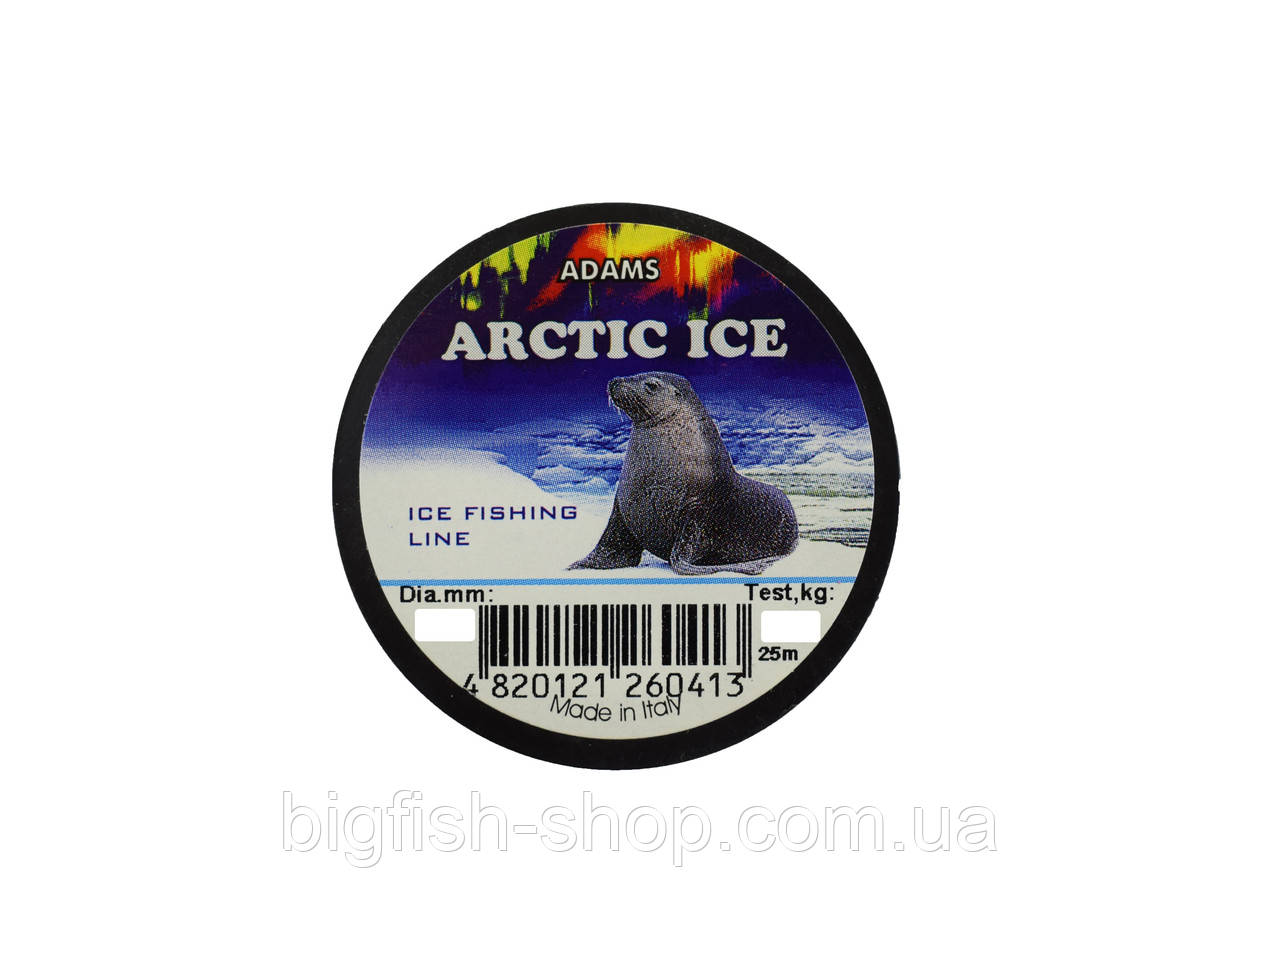 https://images.prom.ua/5300290340_w640_h640_leska-adams-arctic.jpg